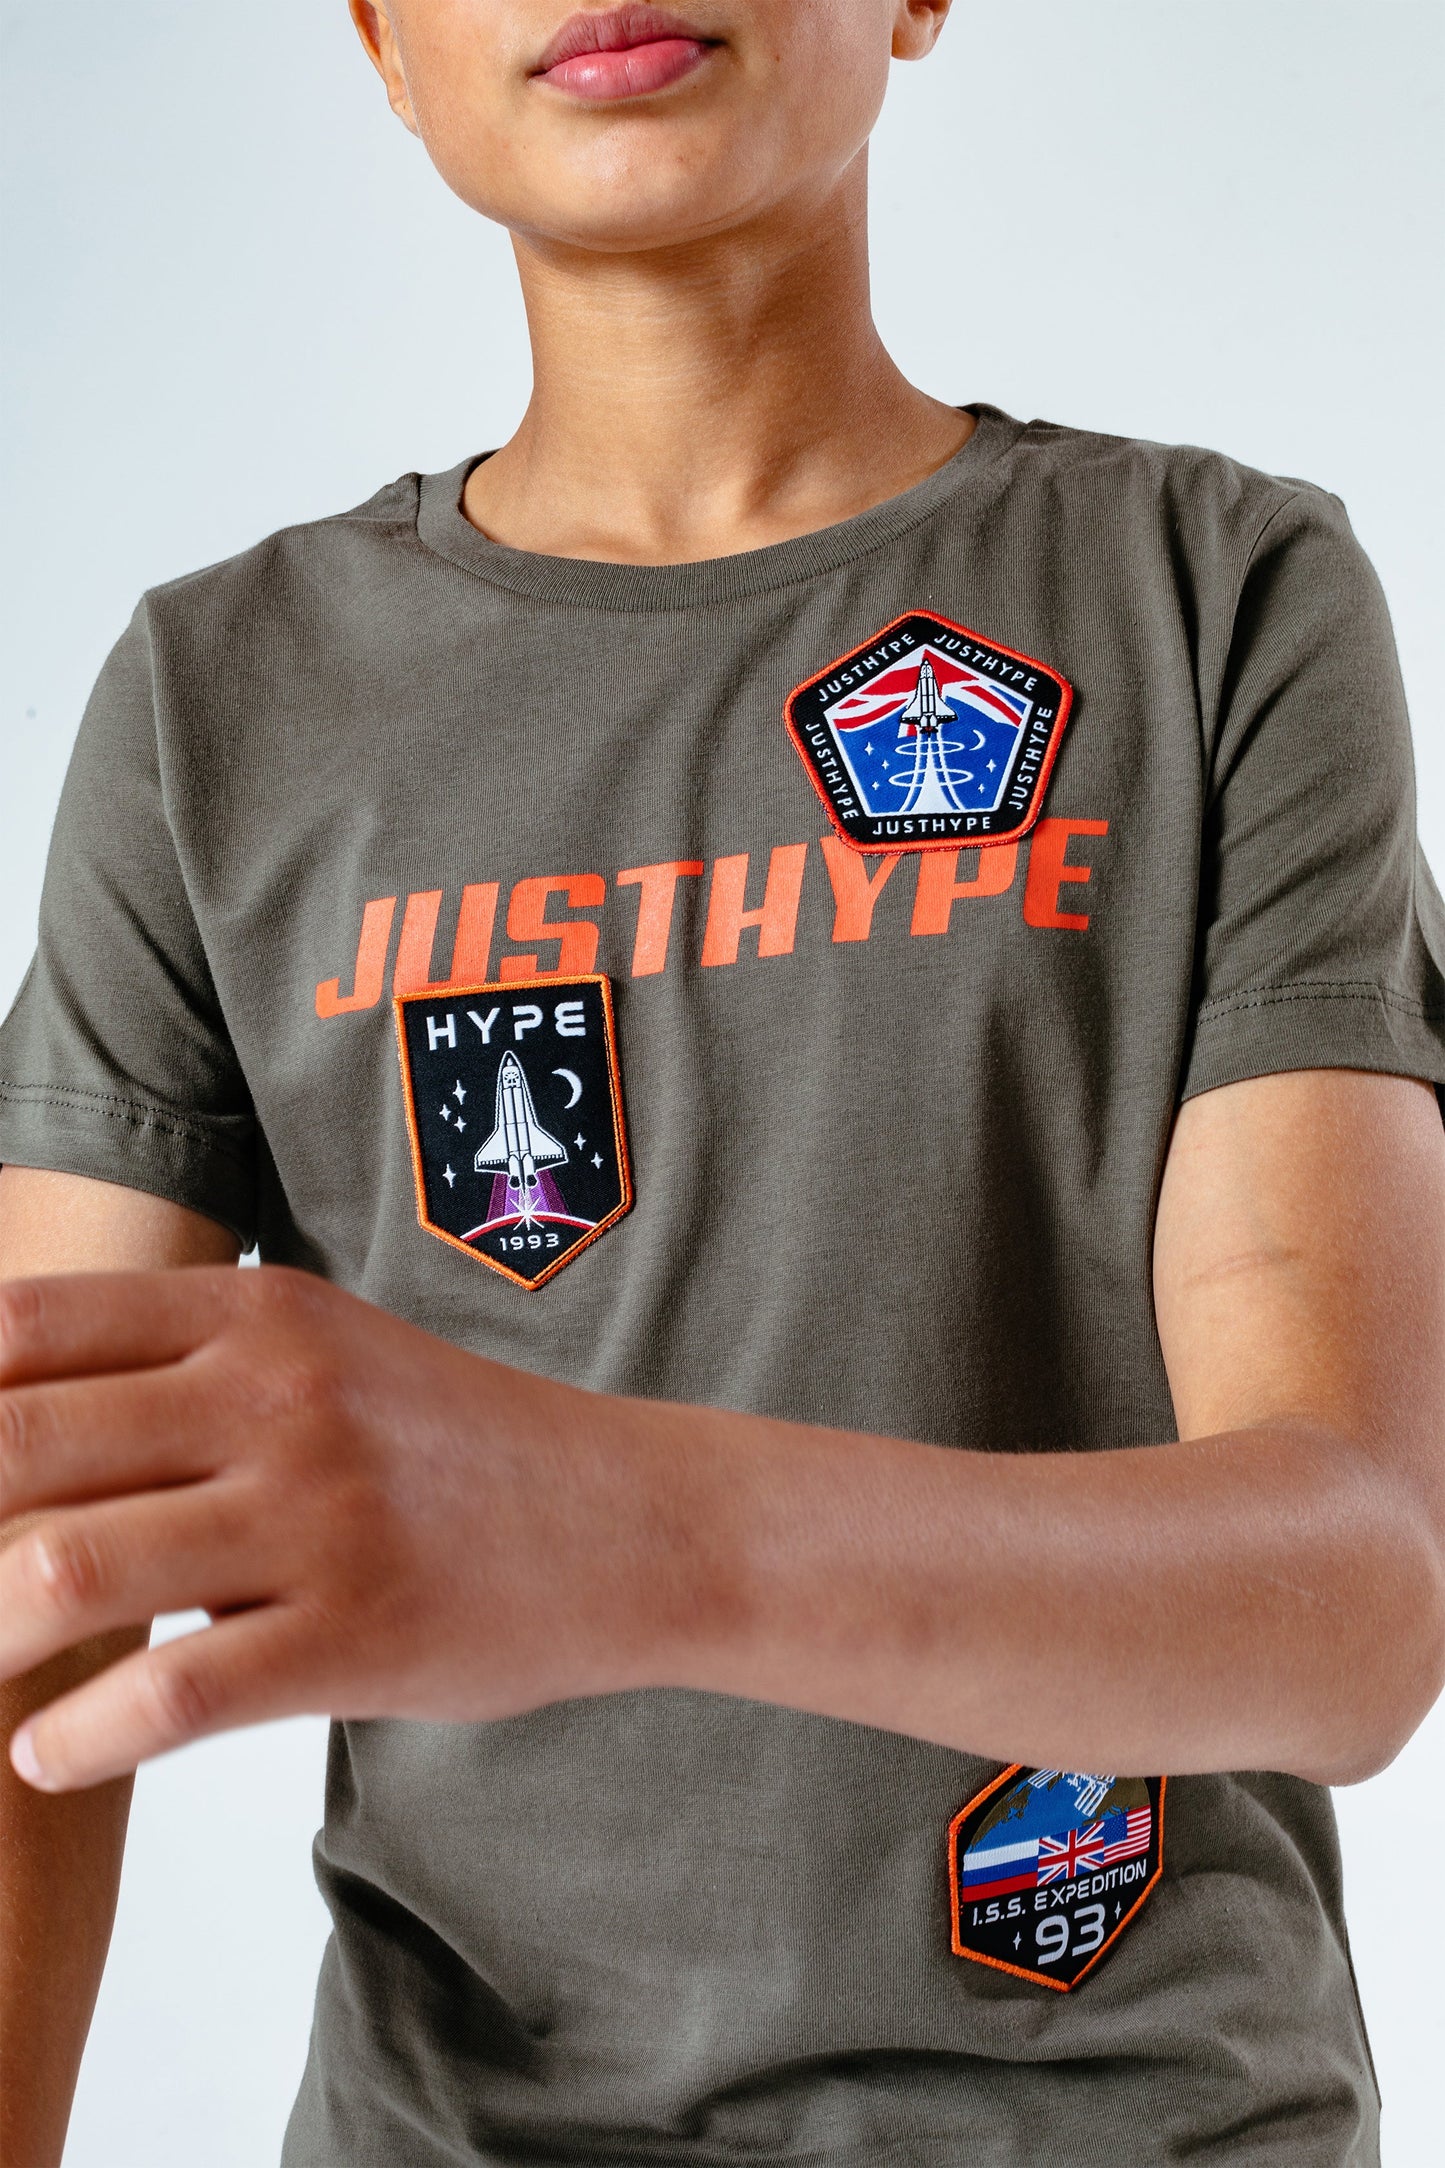 Hype Khaki Space Patch Kids T-Shirt